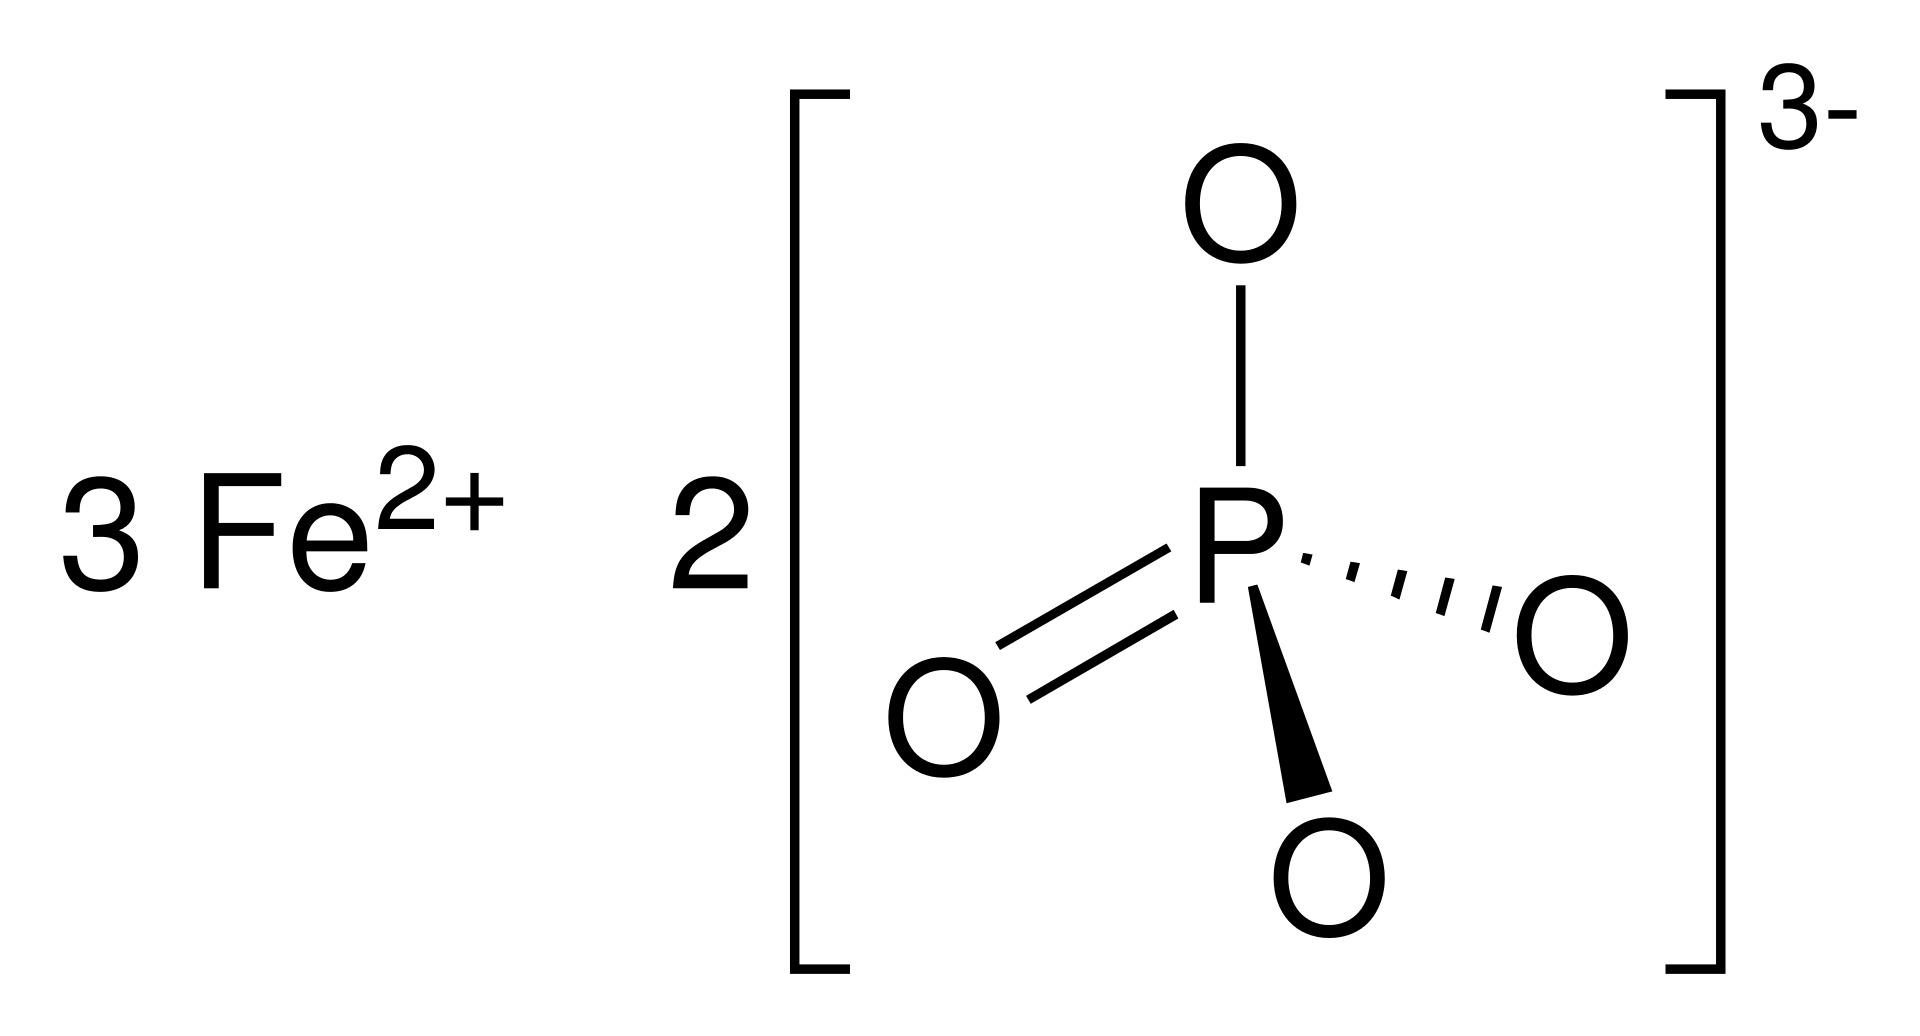 Fepo4 цвет. Метафосфат железа 3 графическая формула. Фосфат Fe 2. Фосфат железа графическая формула. Фосфат железа структурная формула.